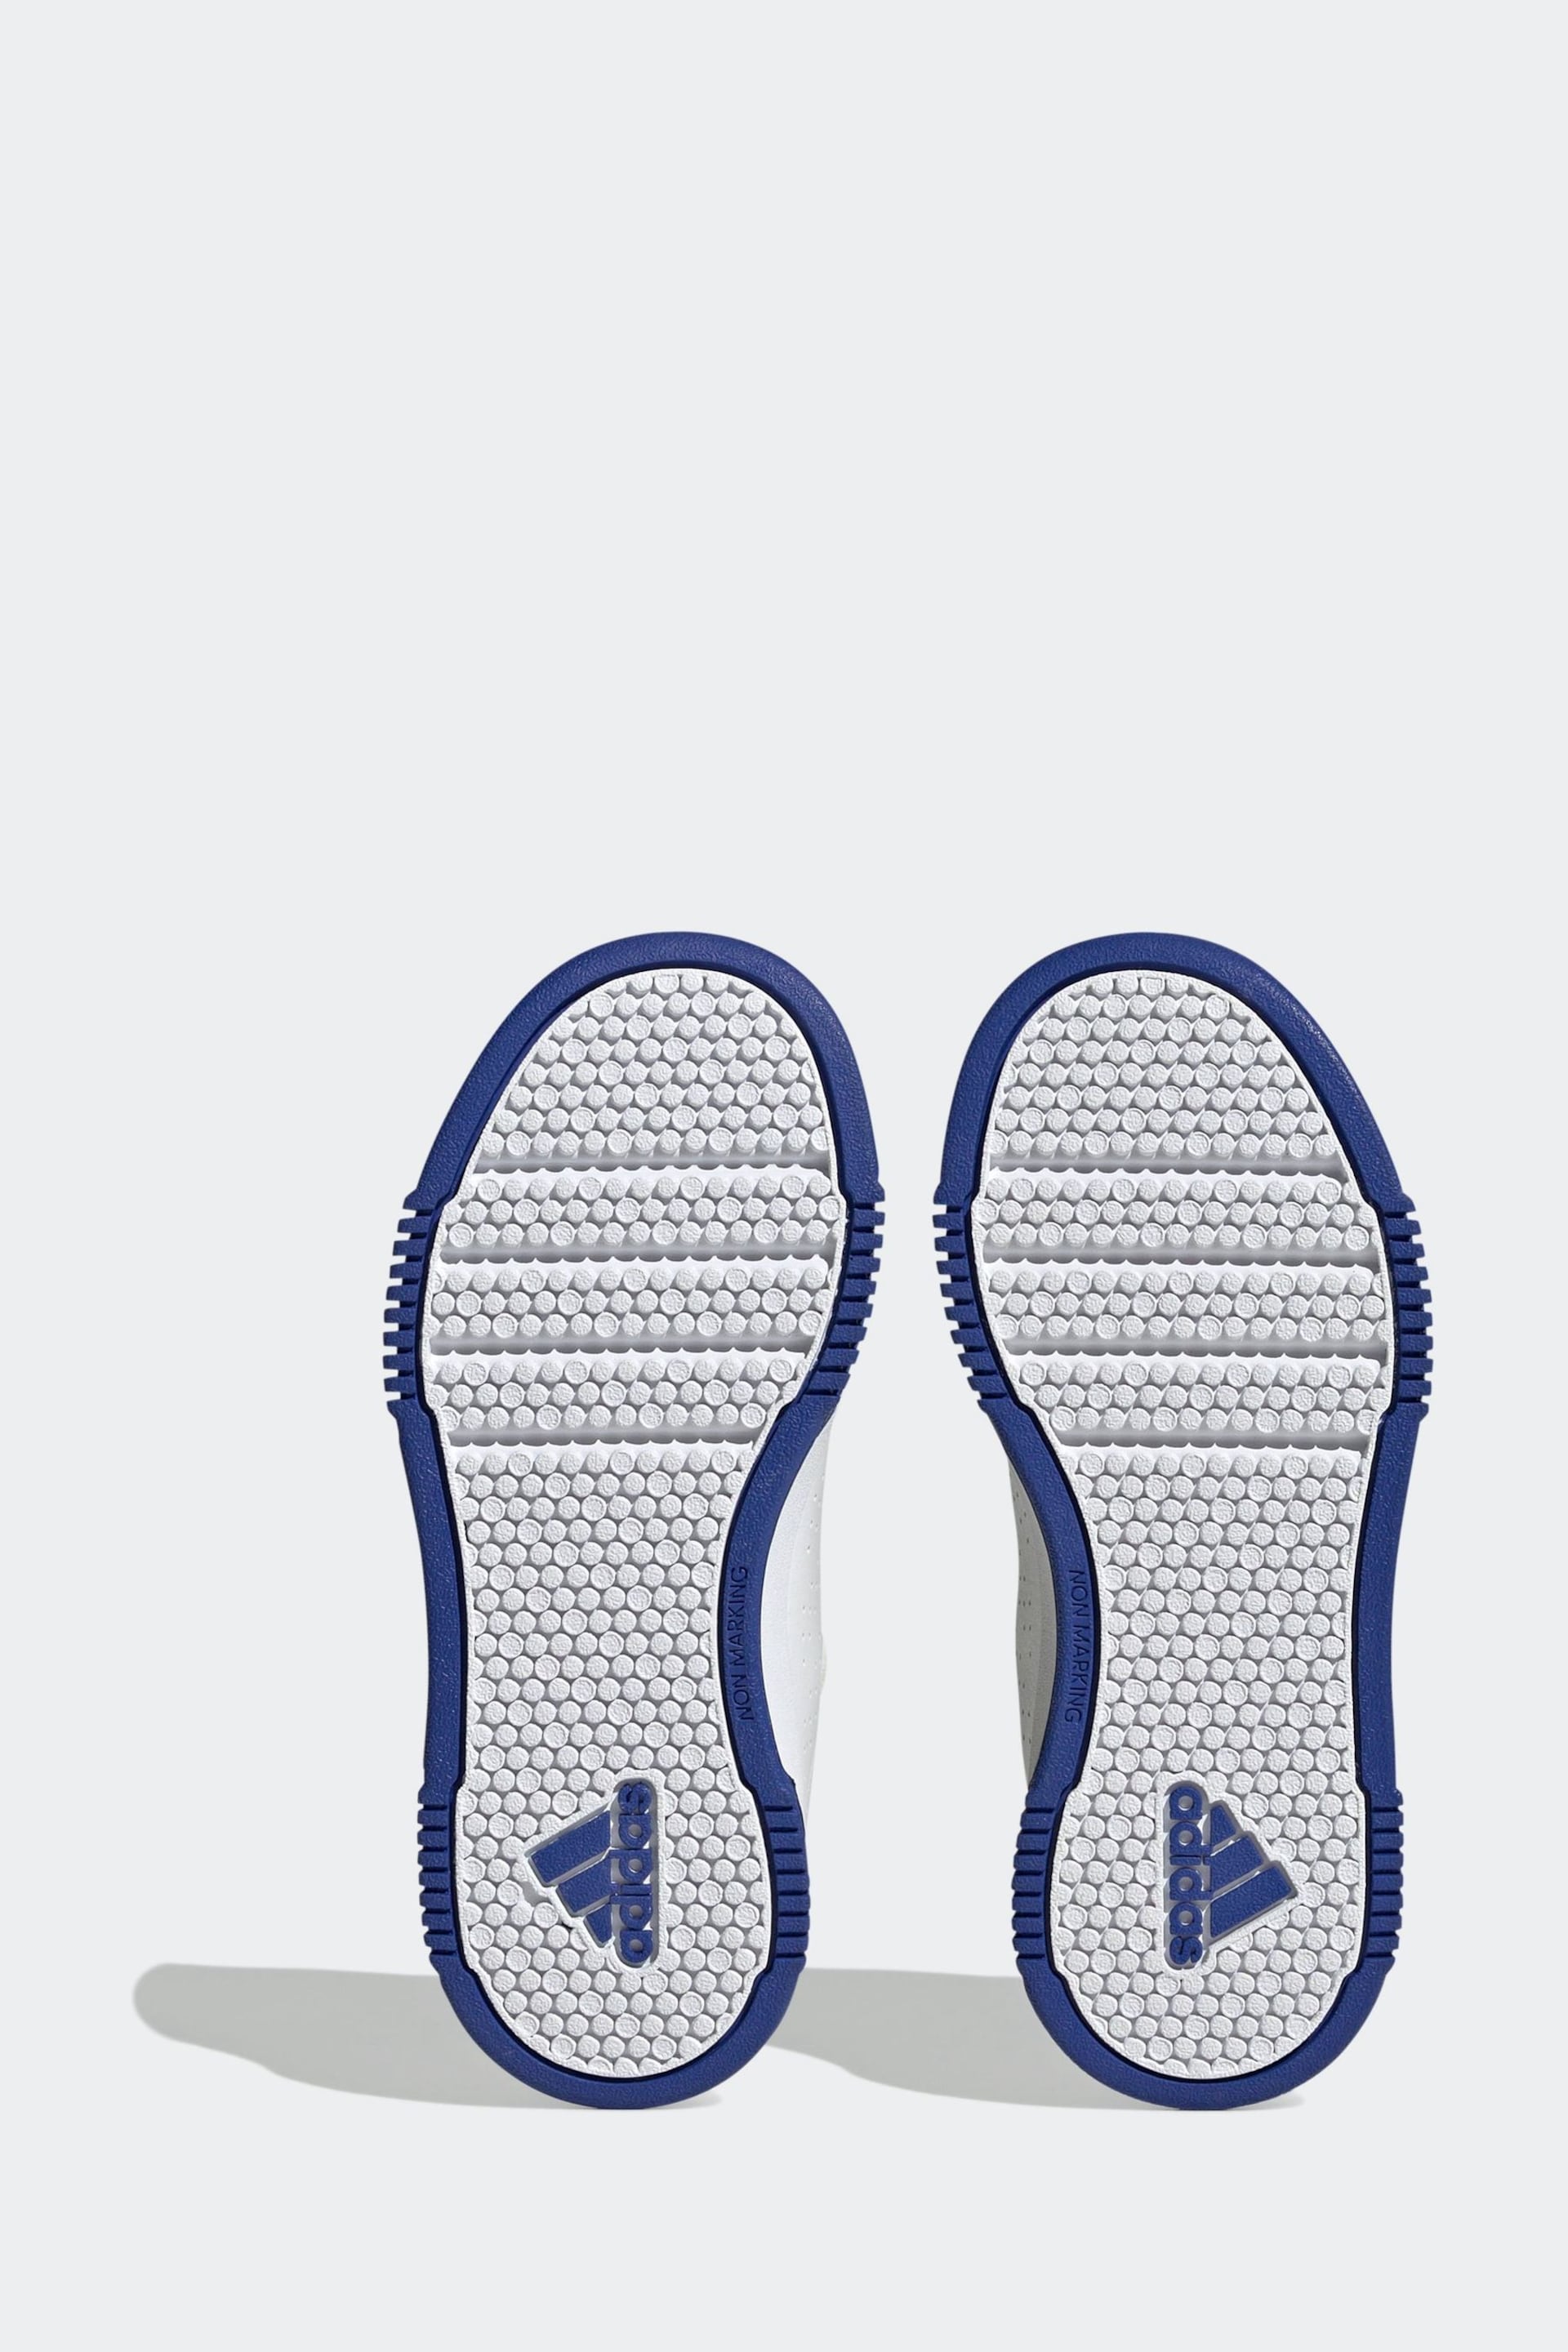 adidas White/Blue Tensaur Sport Training Lace Shoes - Image 6 of 8